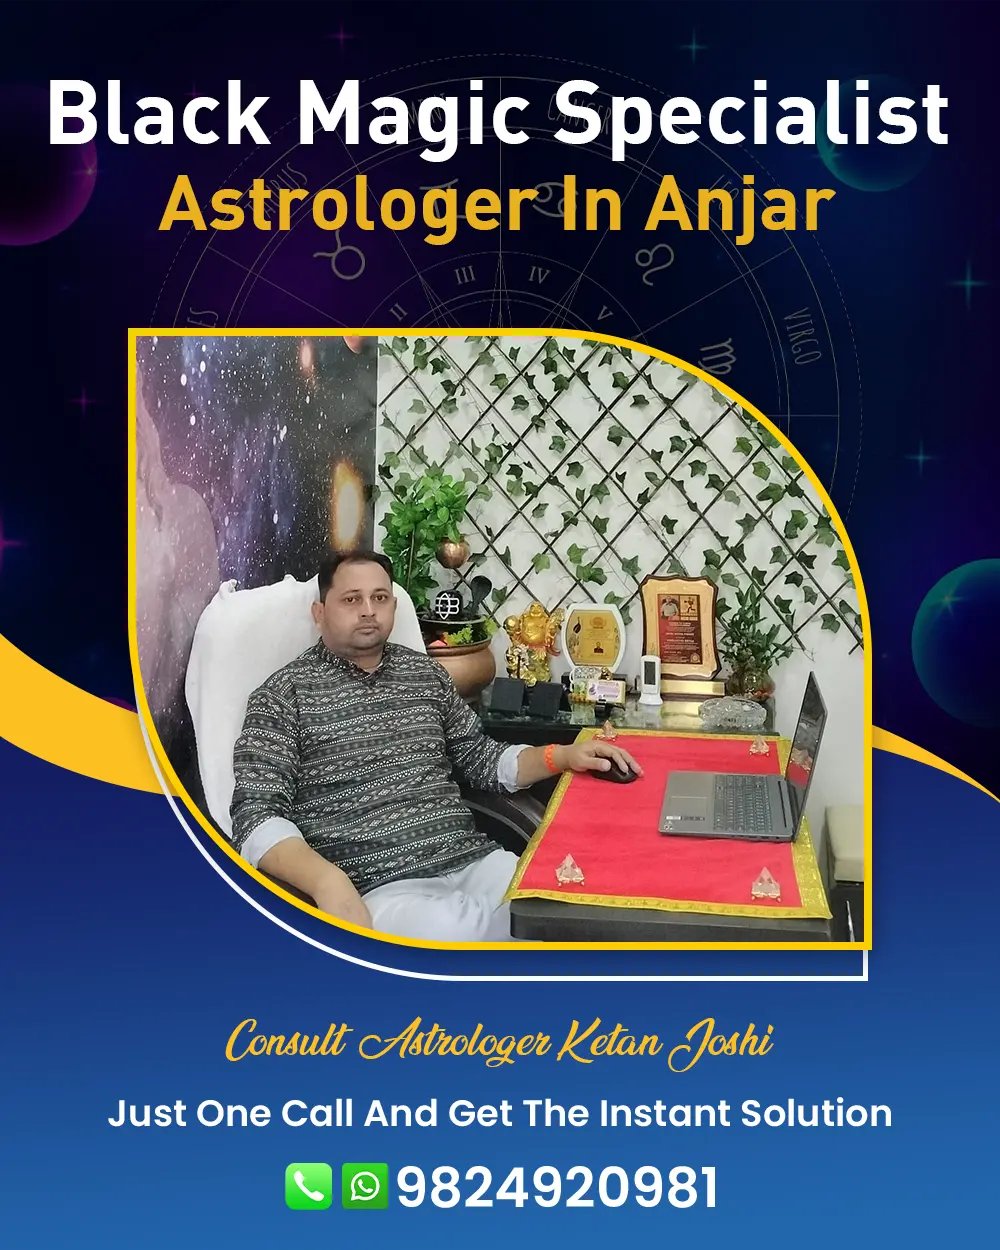 Black Magic Specialist Astrologer In Anjar